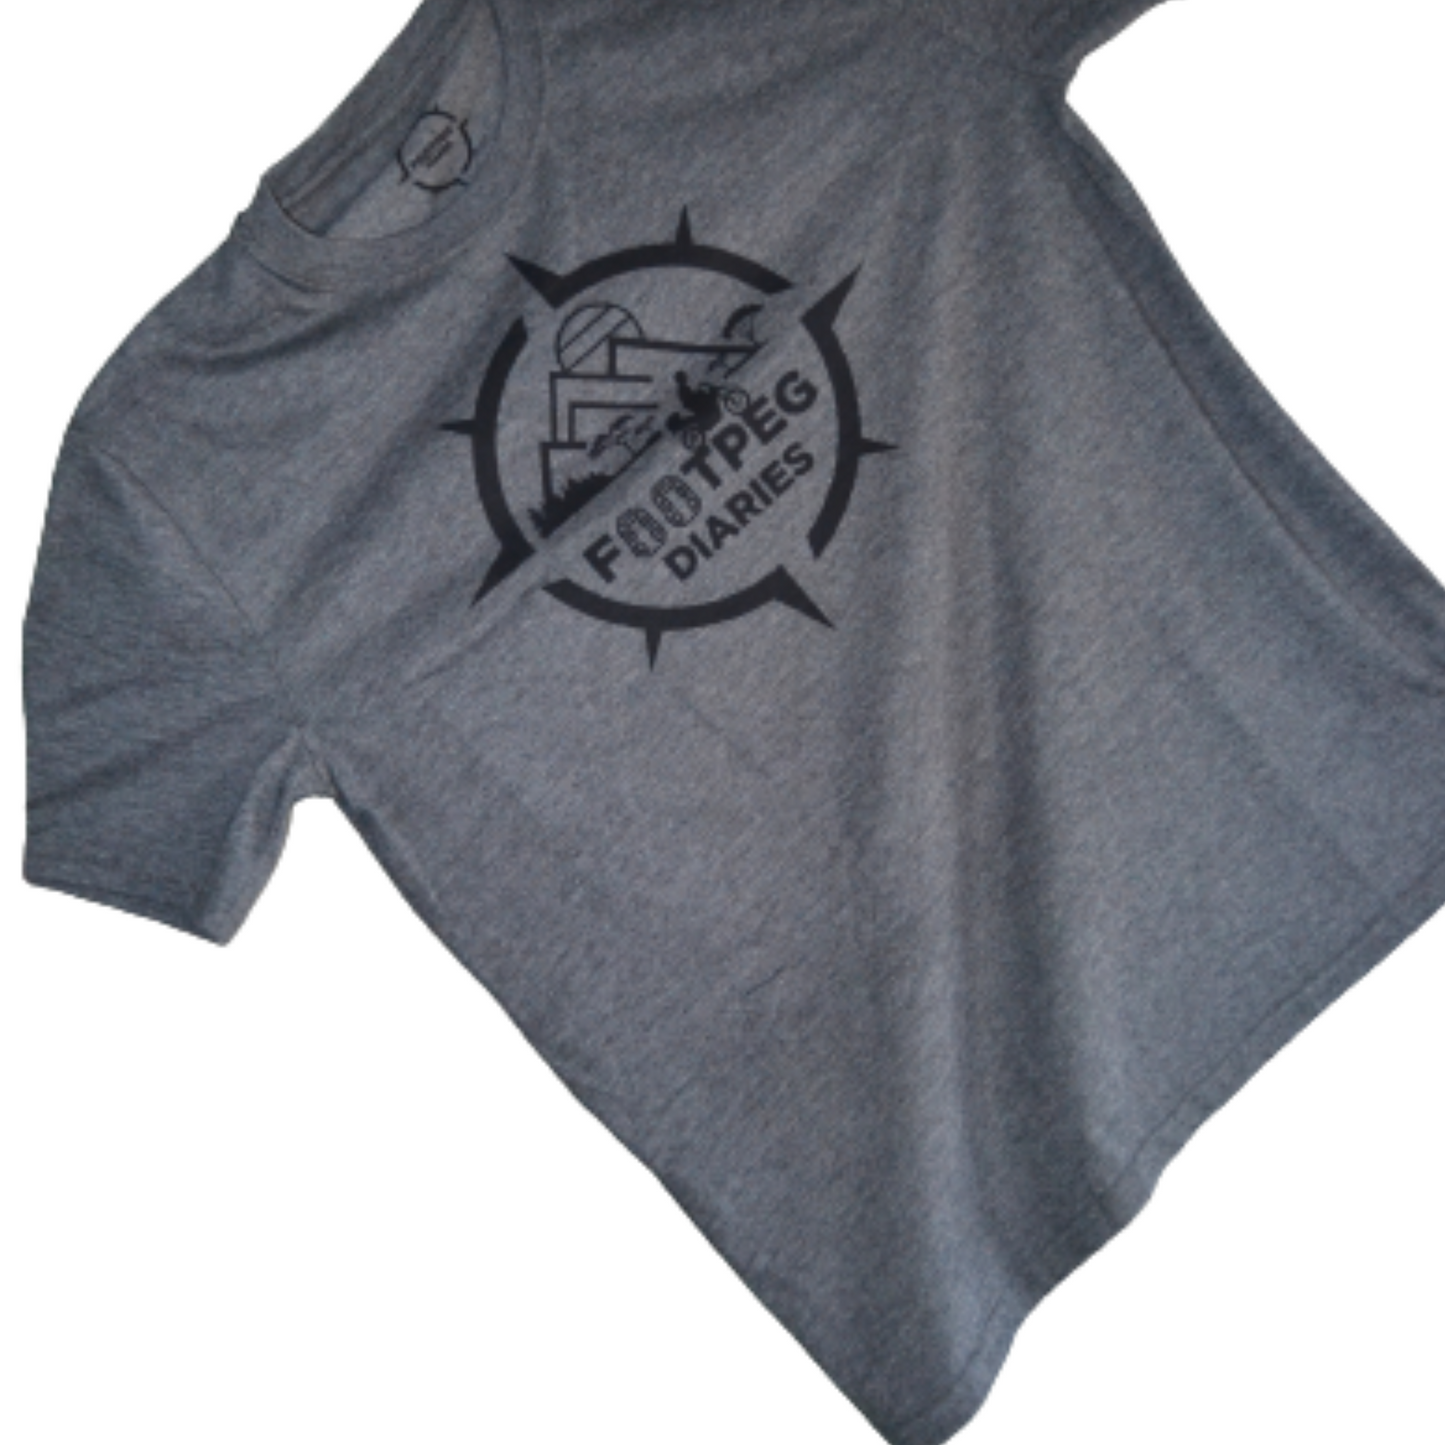 Footpeg Diaries T-shirt  - Charcoal Grey